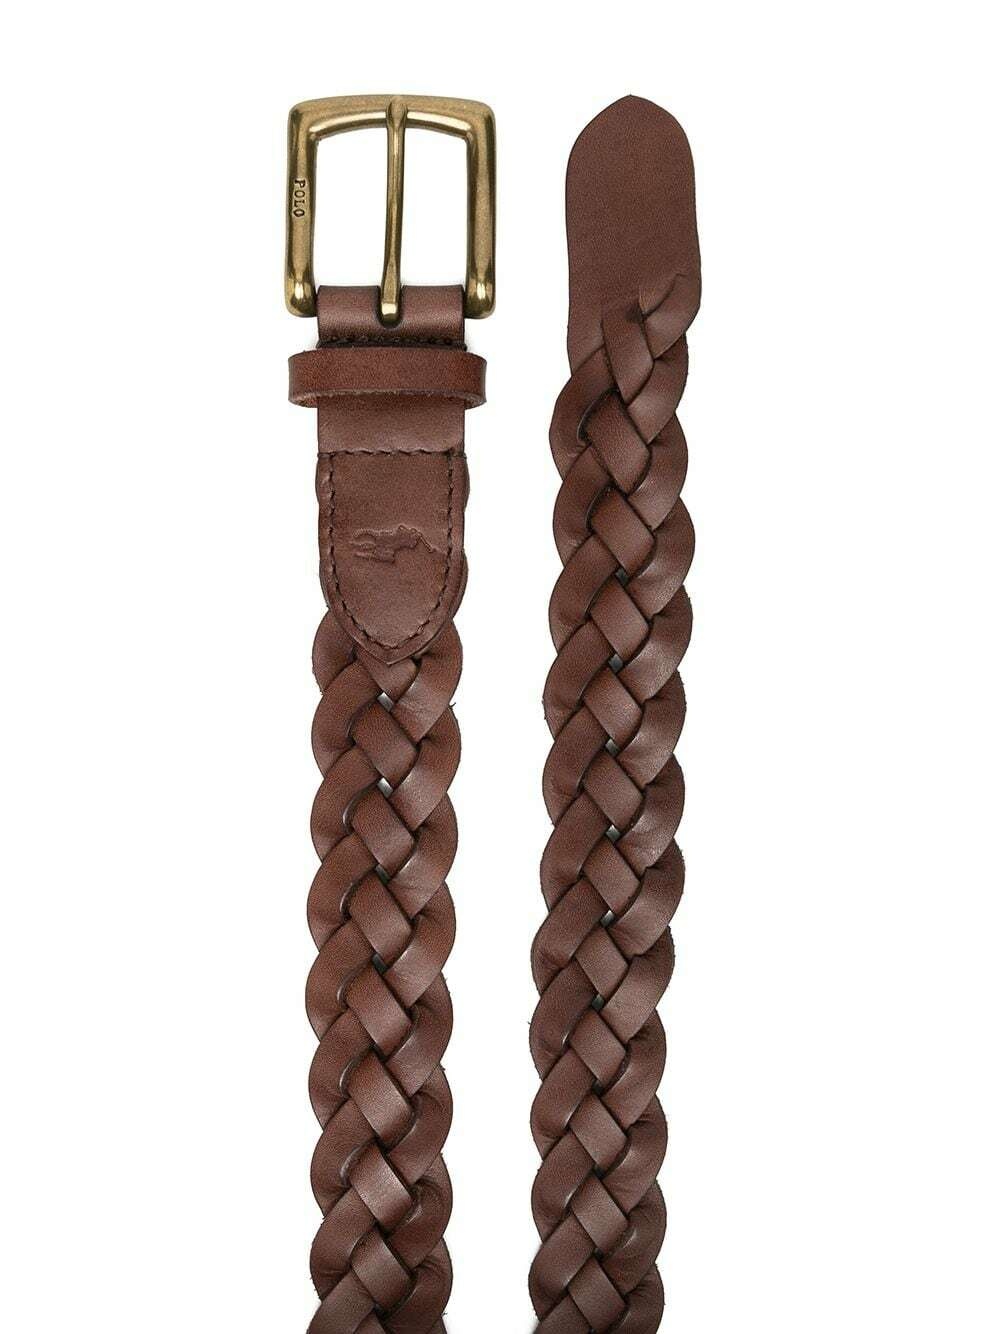 POLO RALPH LAUREN - 3cm Braided Leather Belt - Brown Polo Ralph Lauren